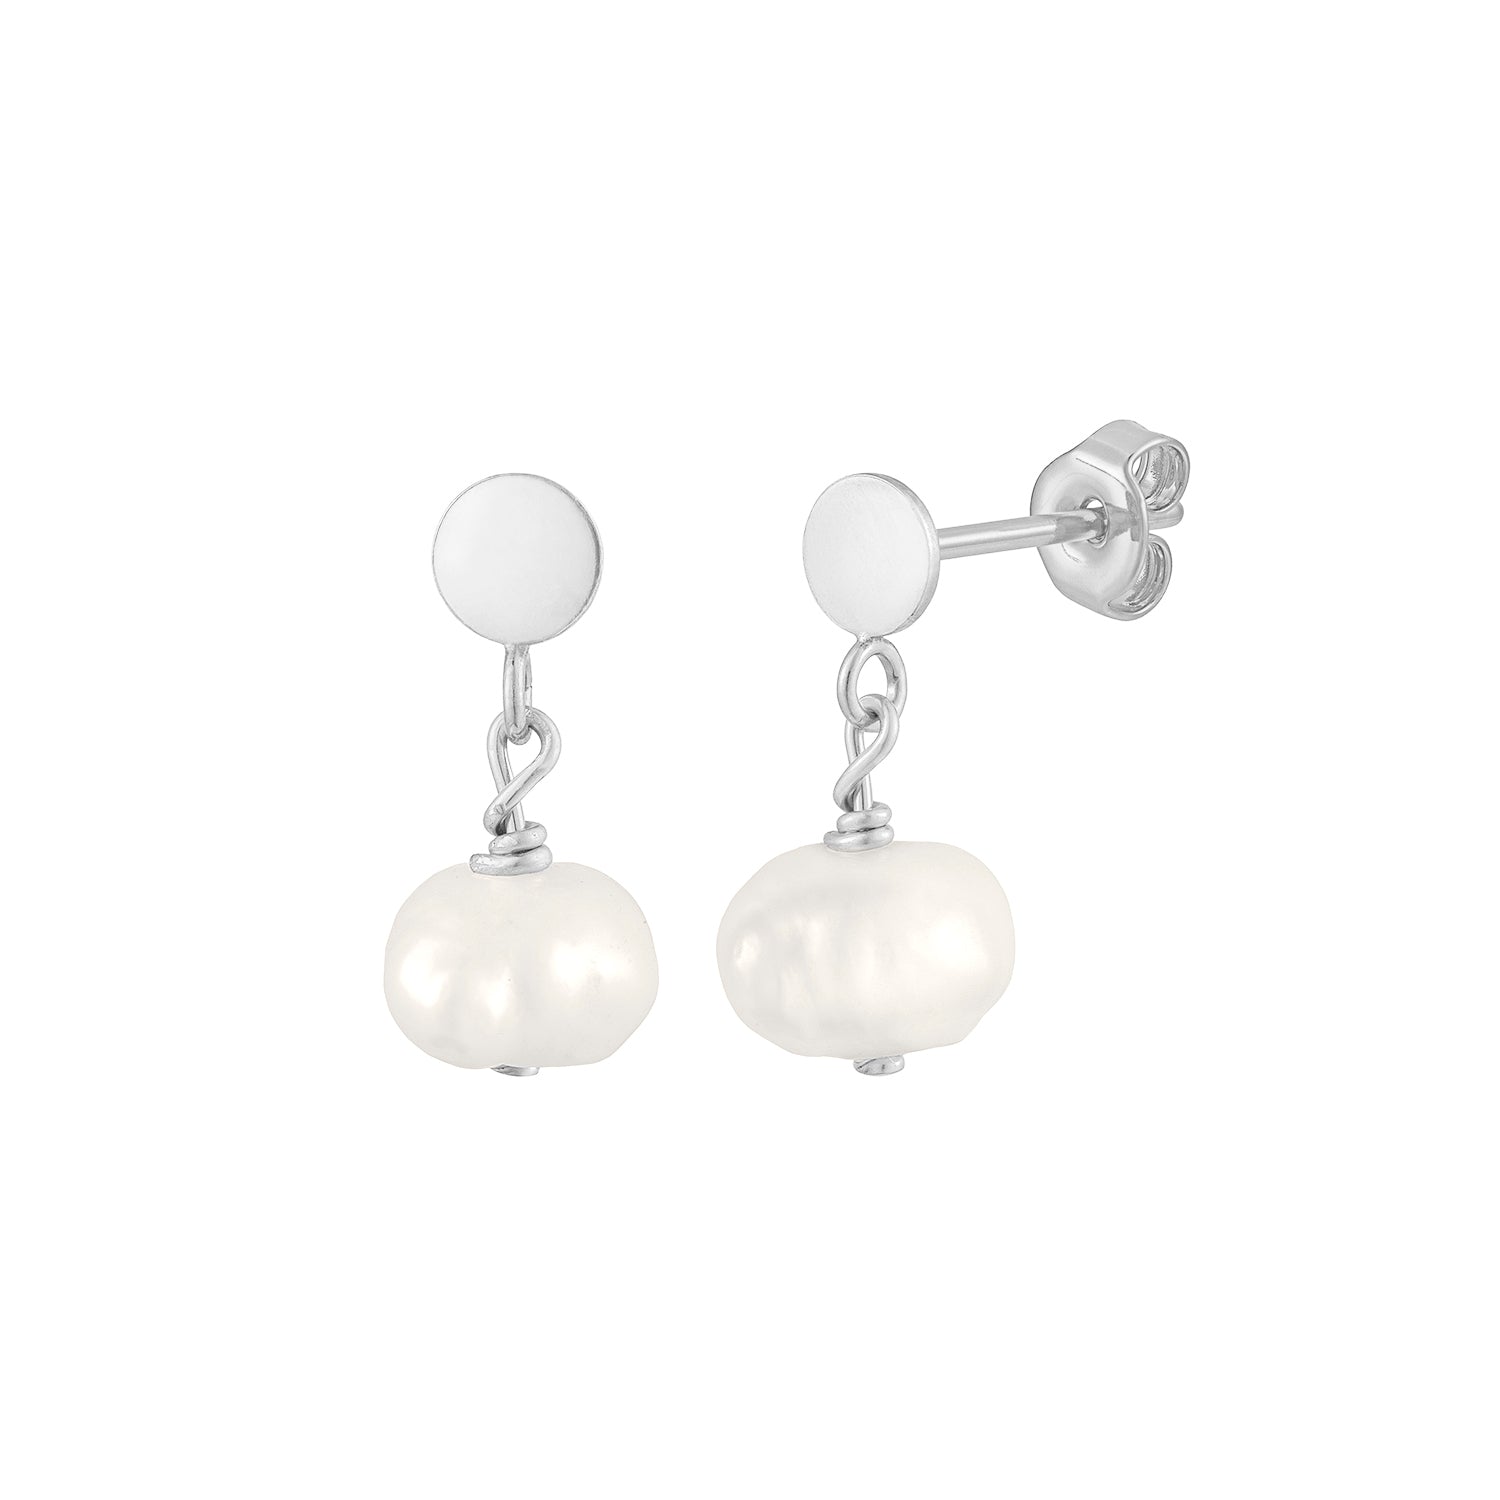 A String of Pearls Drop Earrings Jewelry